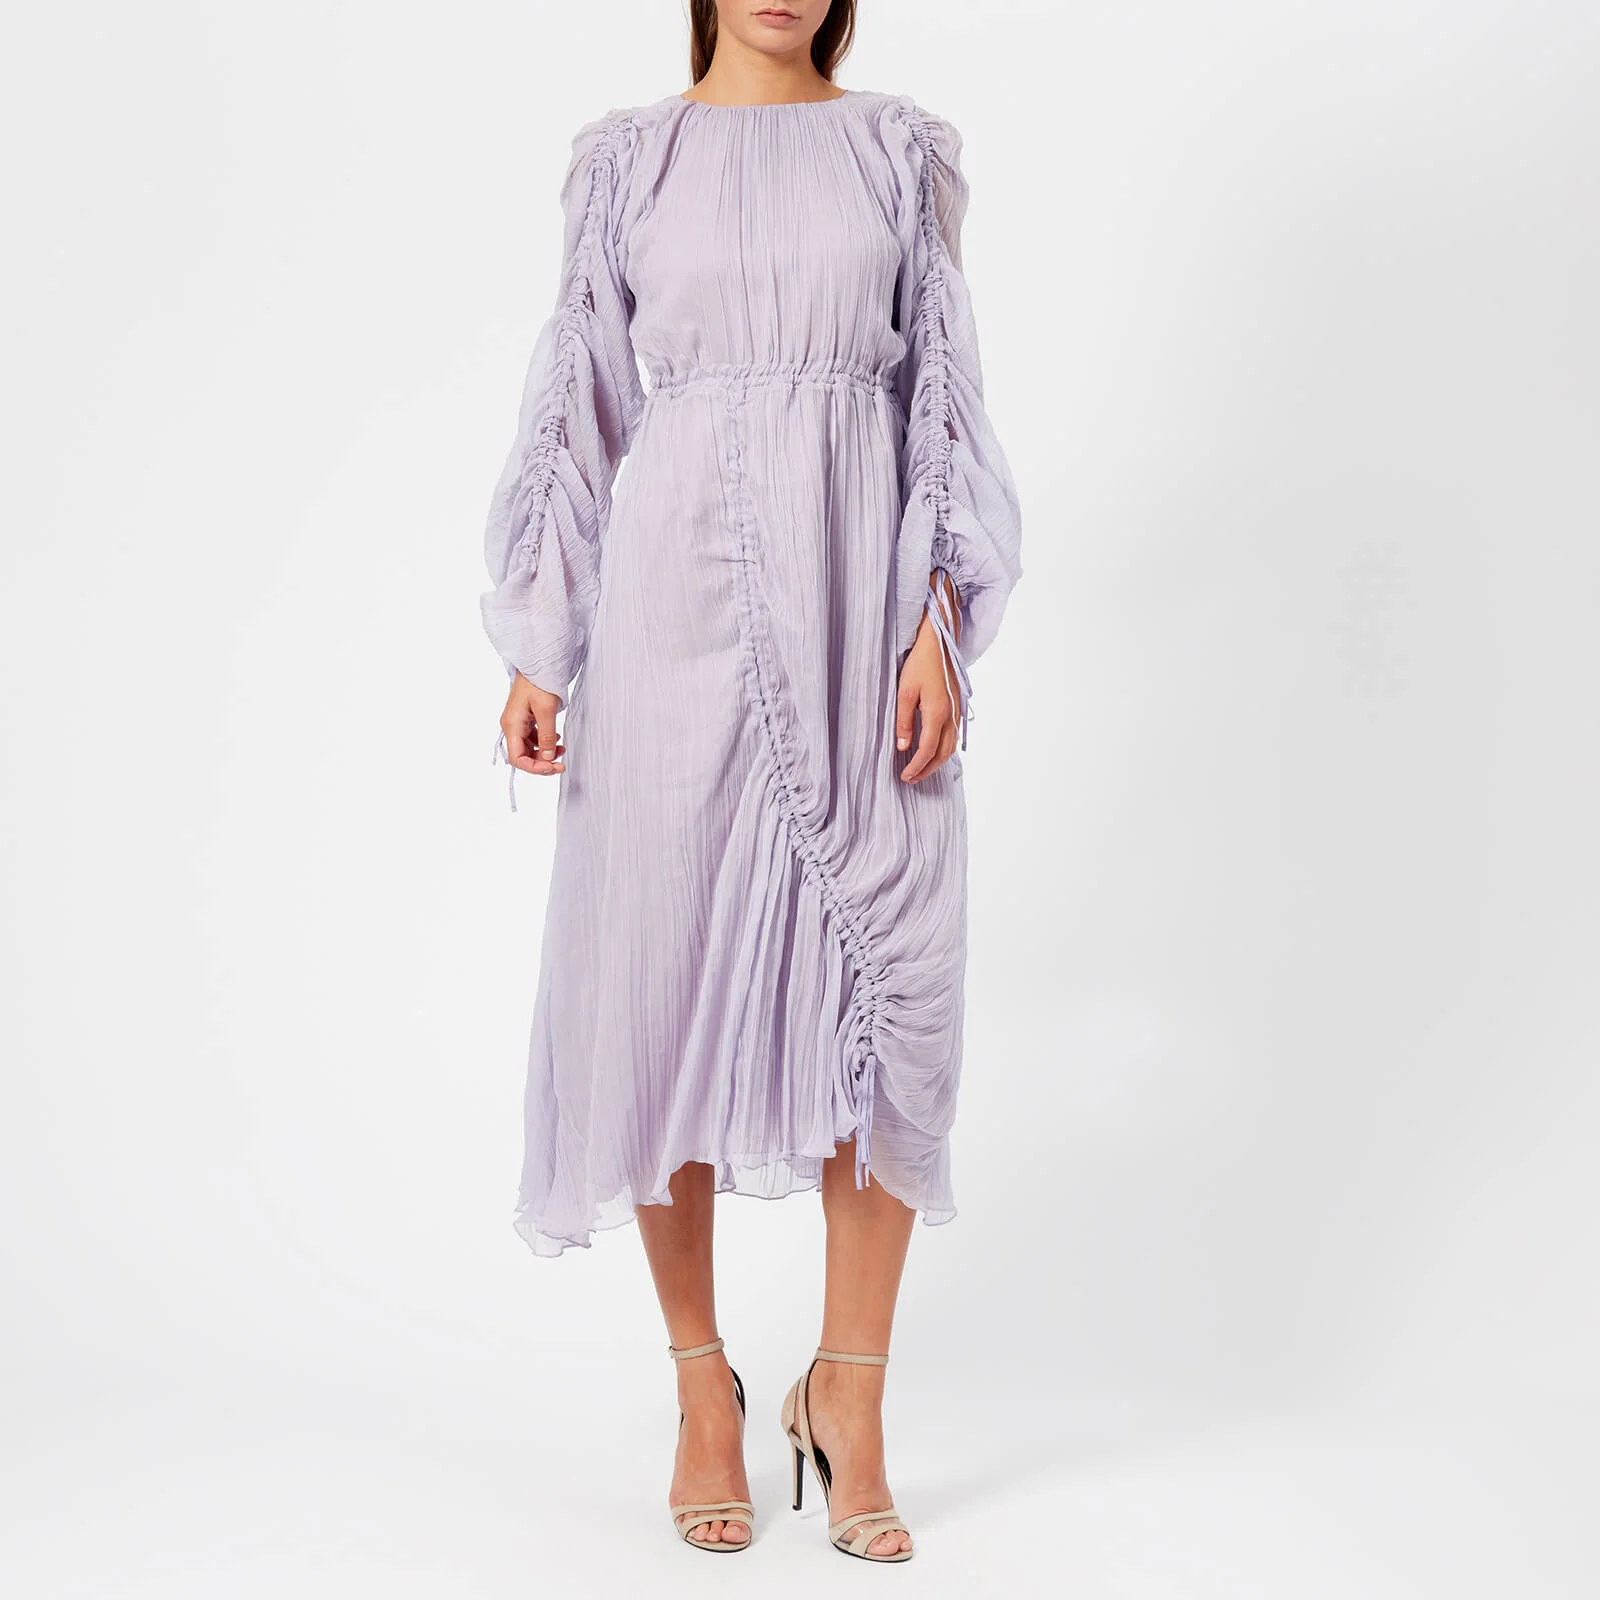 Preen By Thornton Bregazzi Women's Pleated Patricia Dress - Lilac Image 1